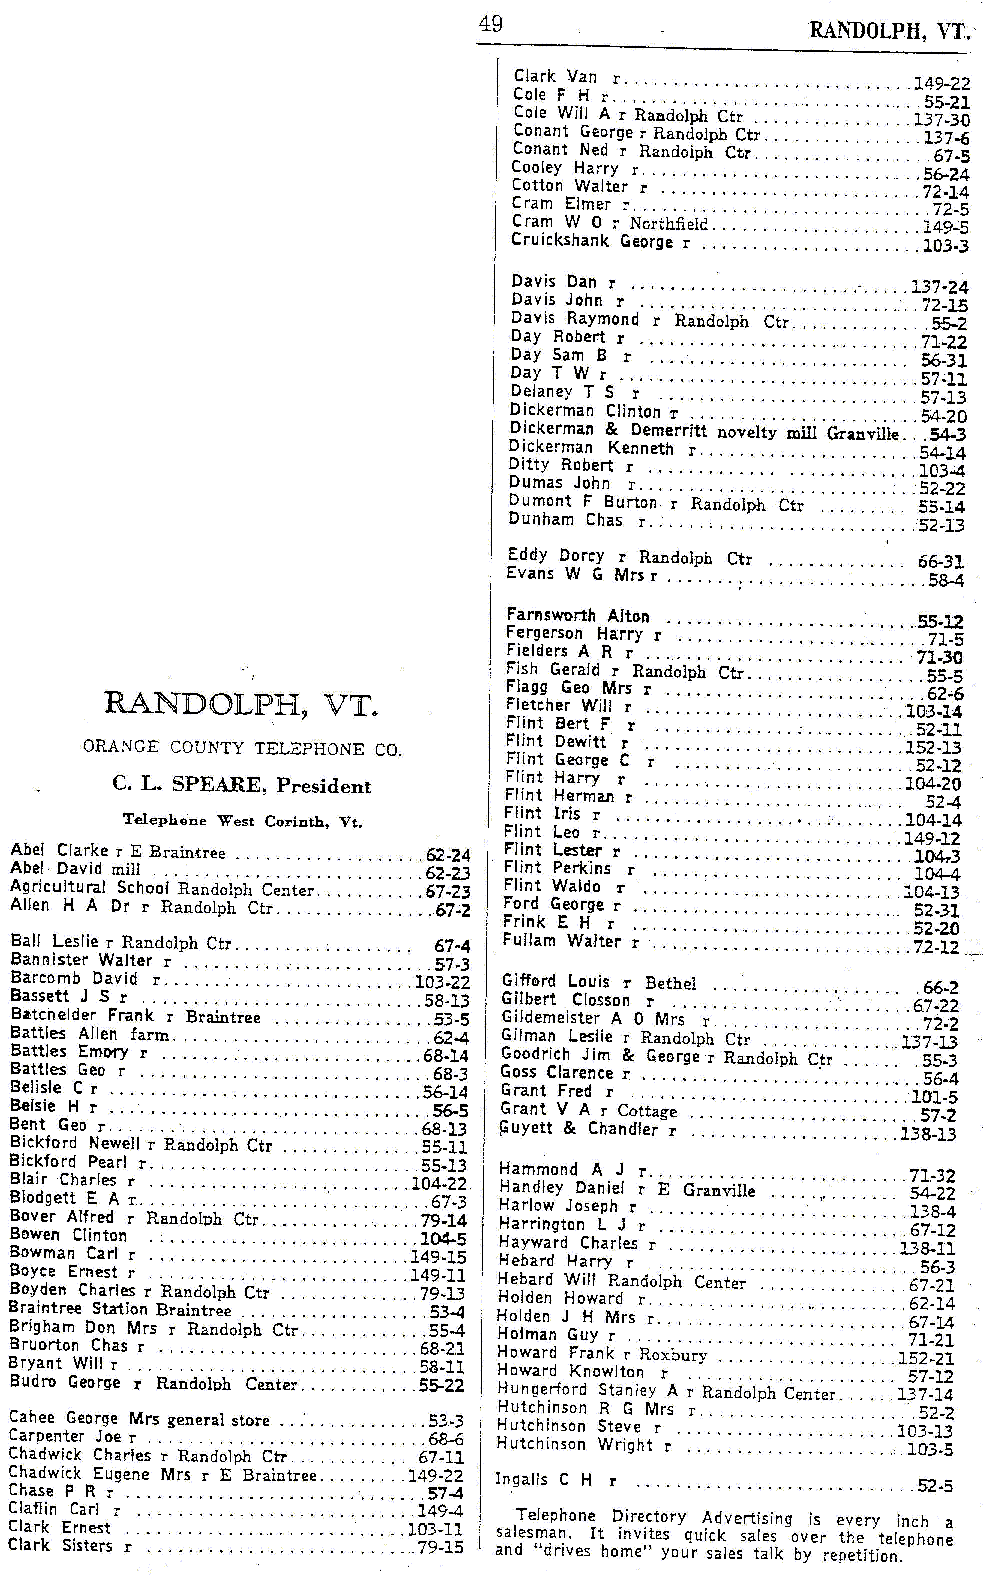 1928 Randolph Vt Telephone Book - Page 49